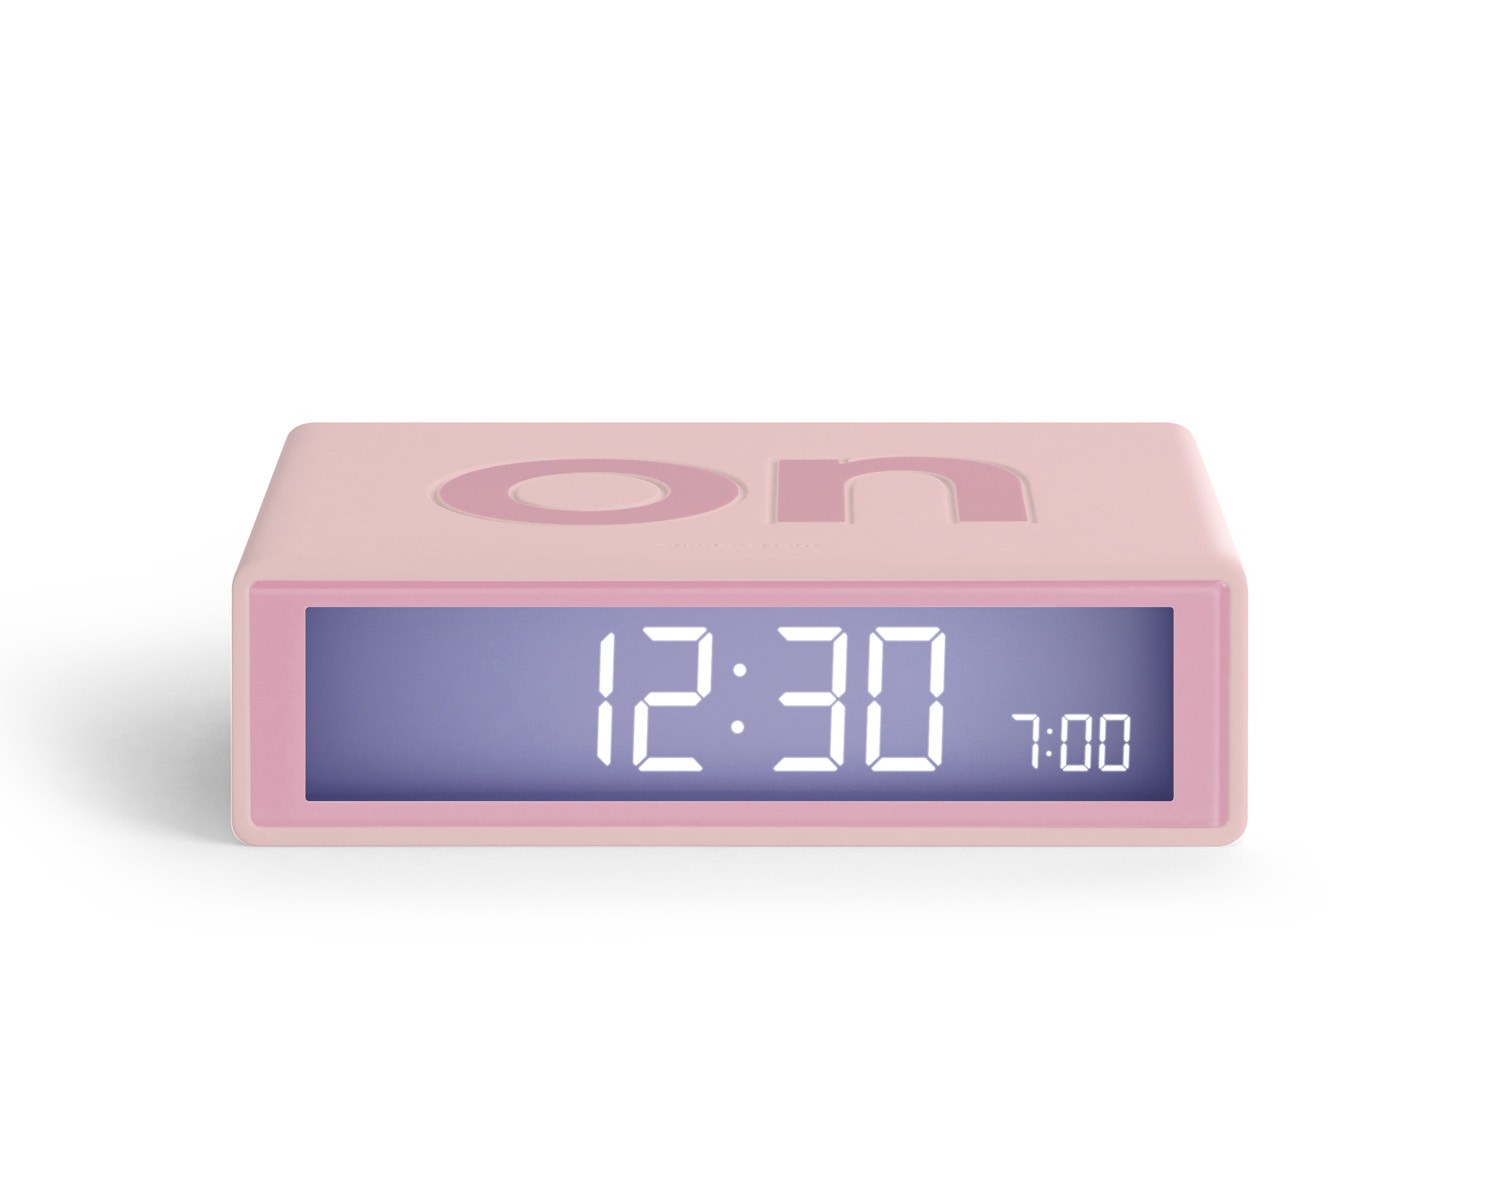 Flip alarm clock pink